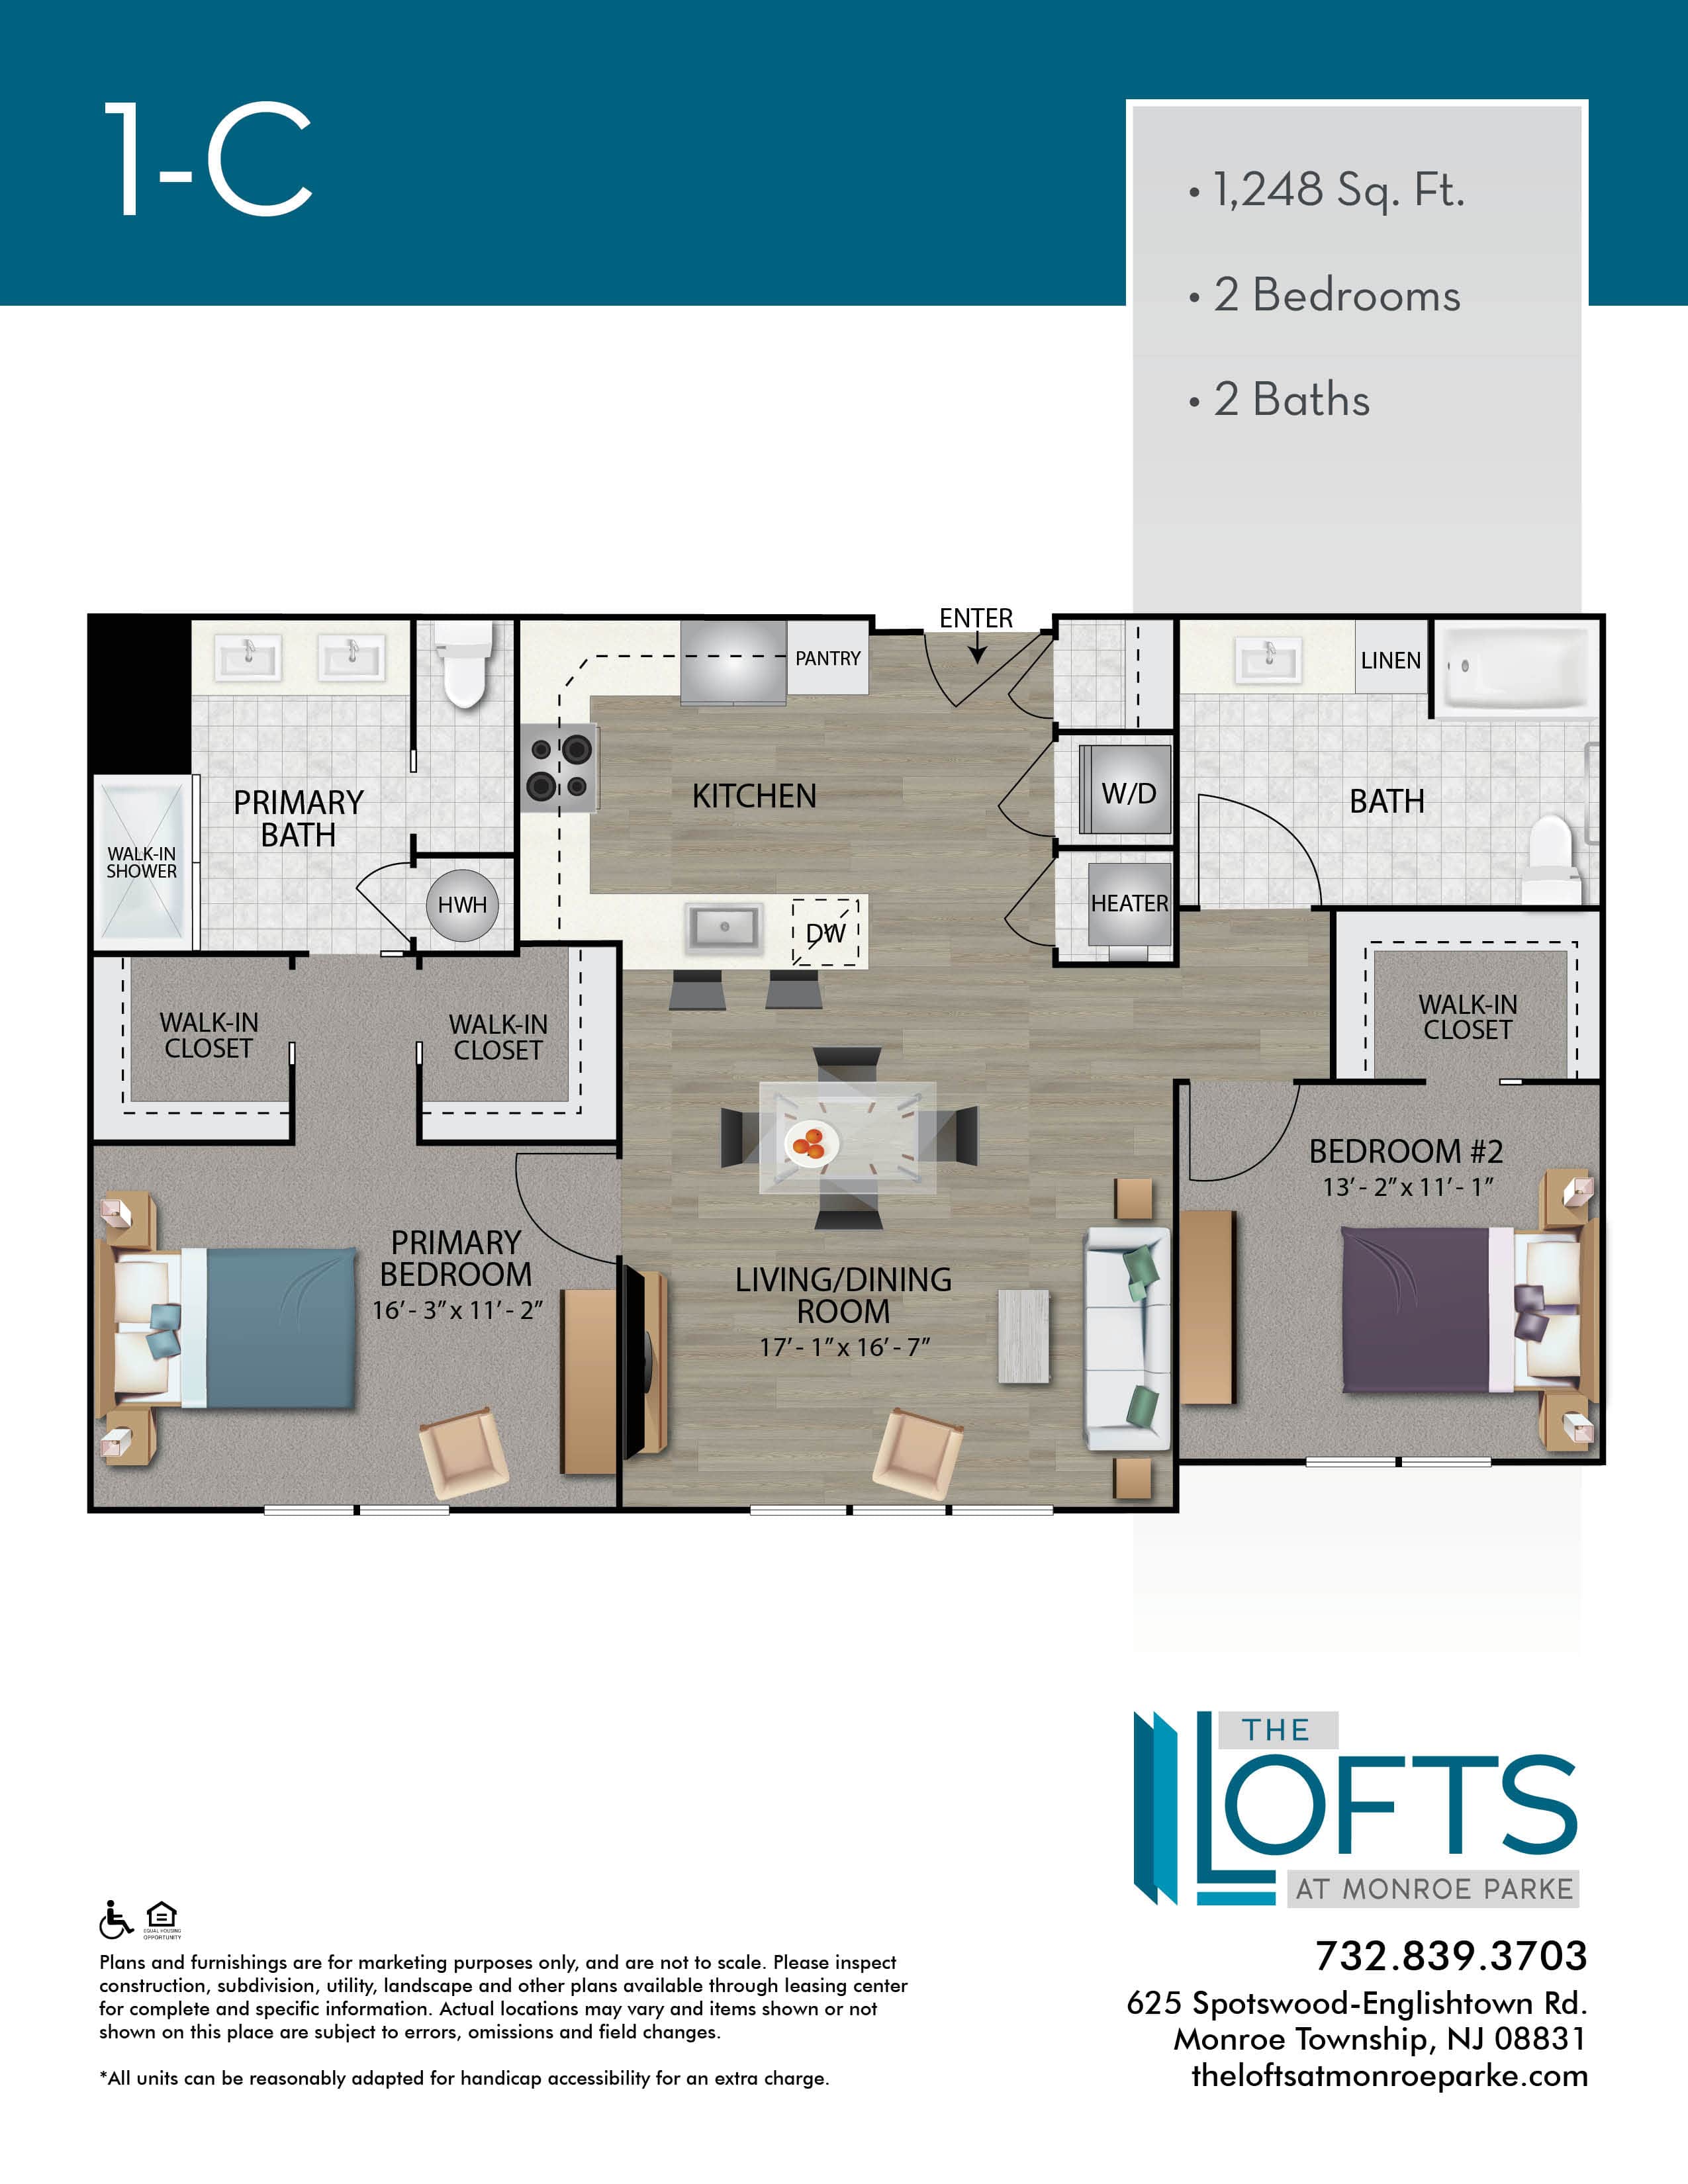 The Lofts at Monroe Park Apartment Floor Plan 1C